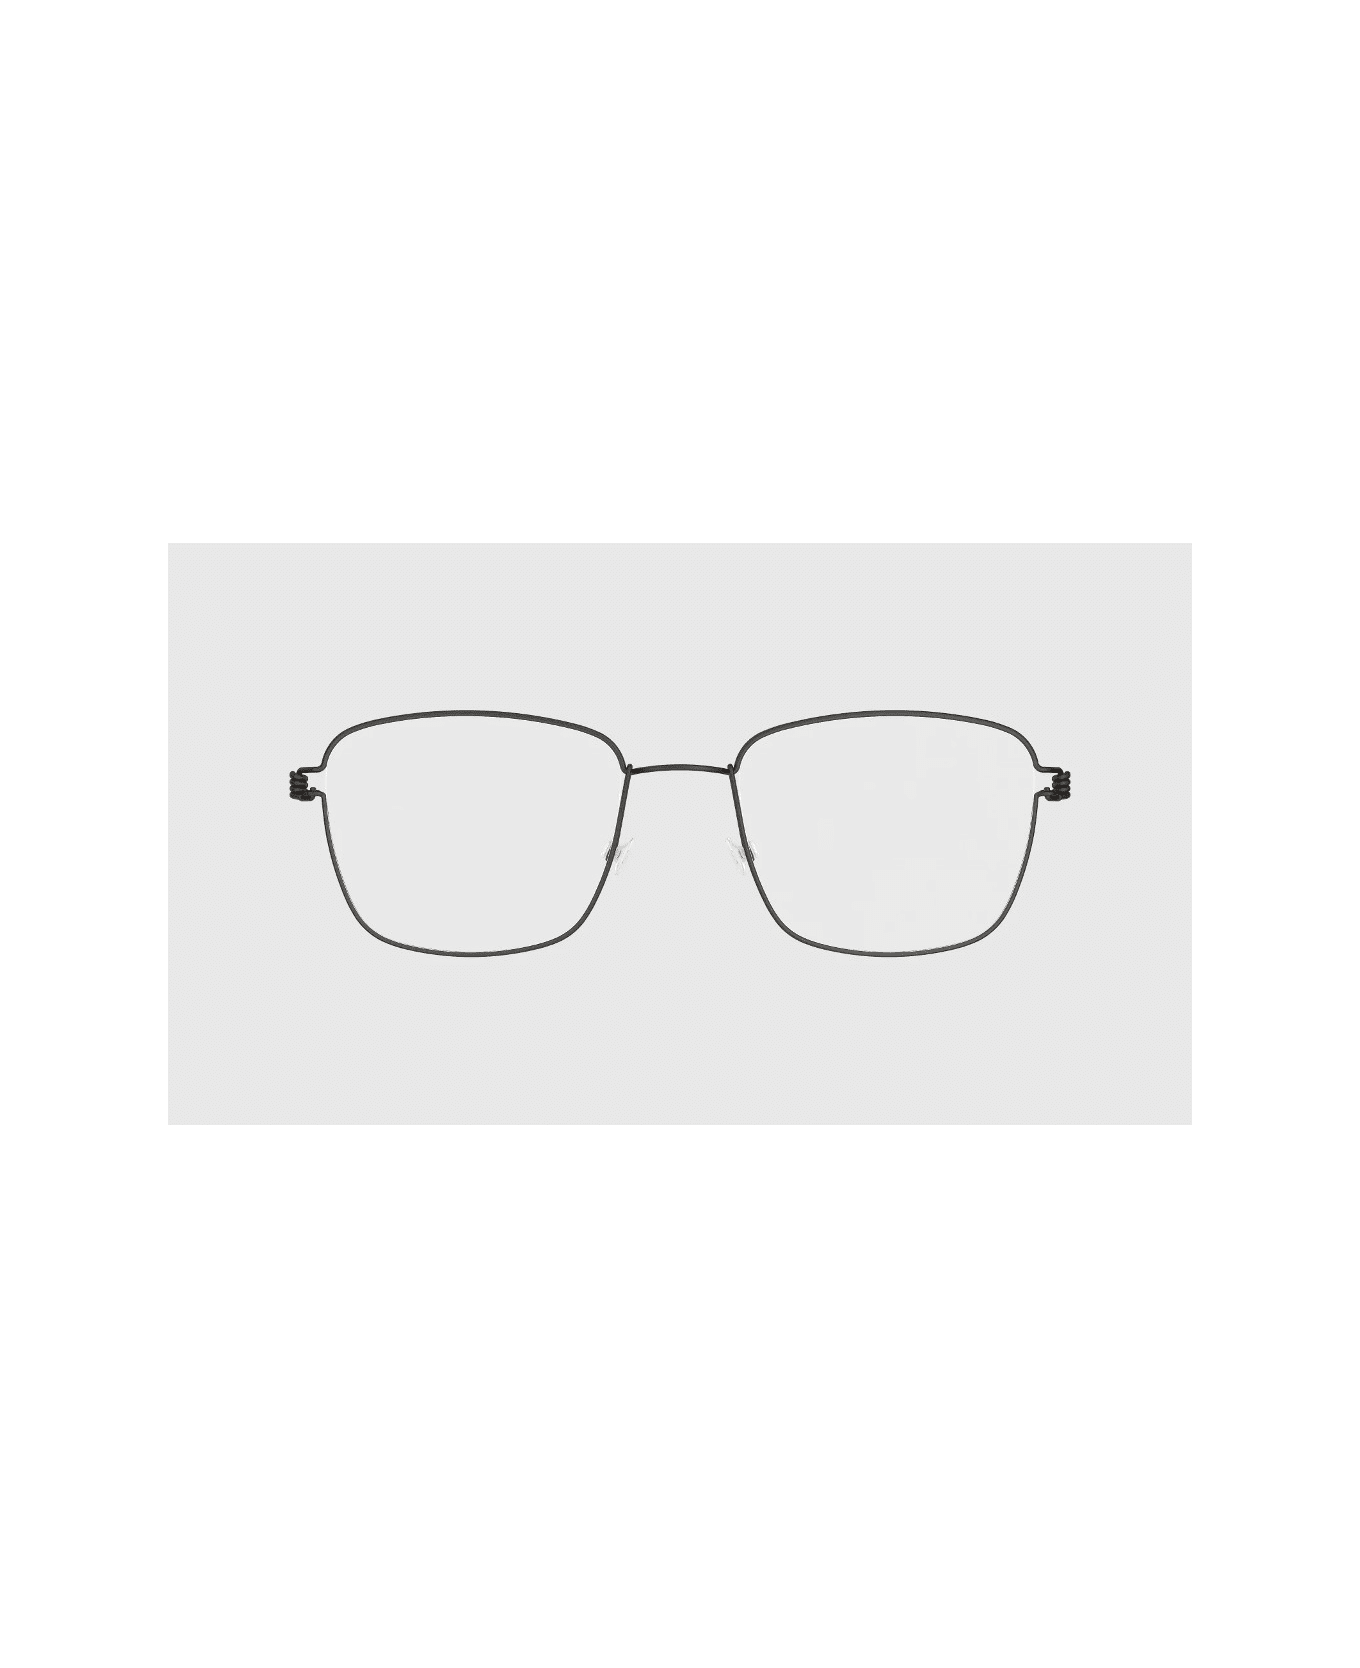 LINDBERG Pablo U9 Glasses